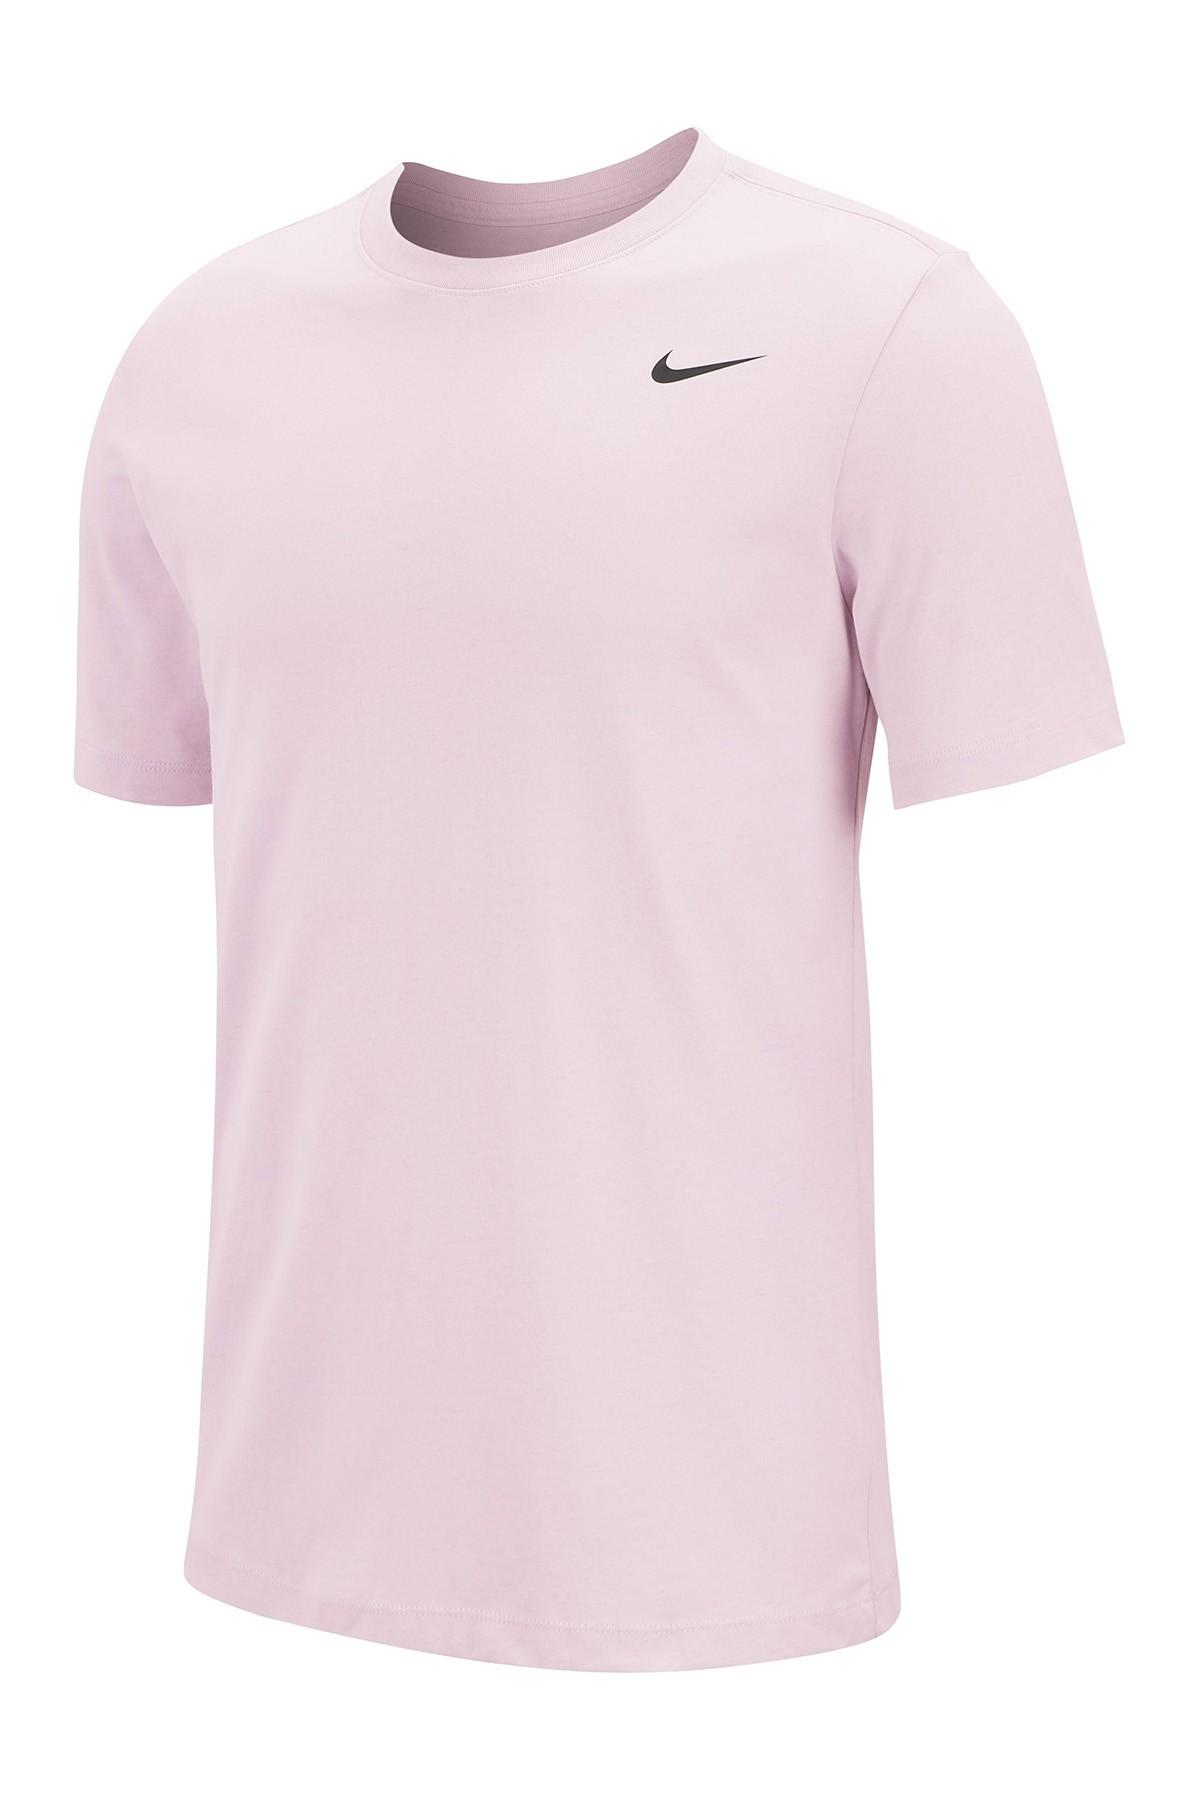 konsol Hurtig diagonal Nike Dry Tee Dri-fittm Cotton Crew Solid (pink Foam/pale Pink/black) T Shirt  for Men | Lyst